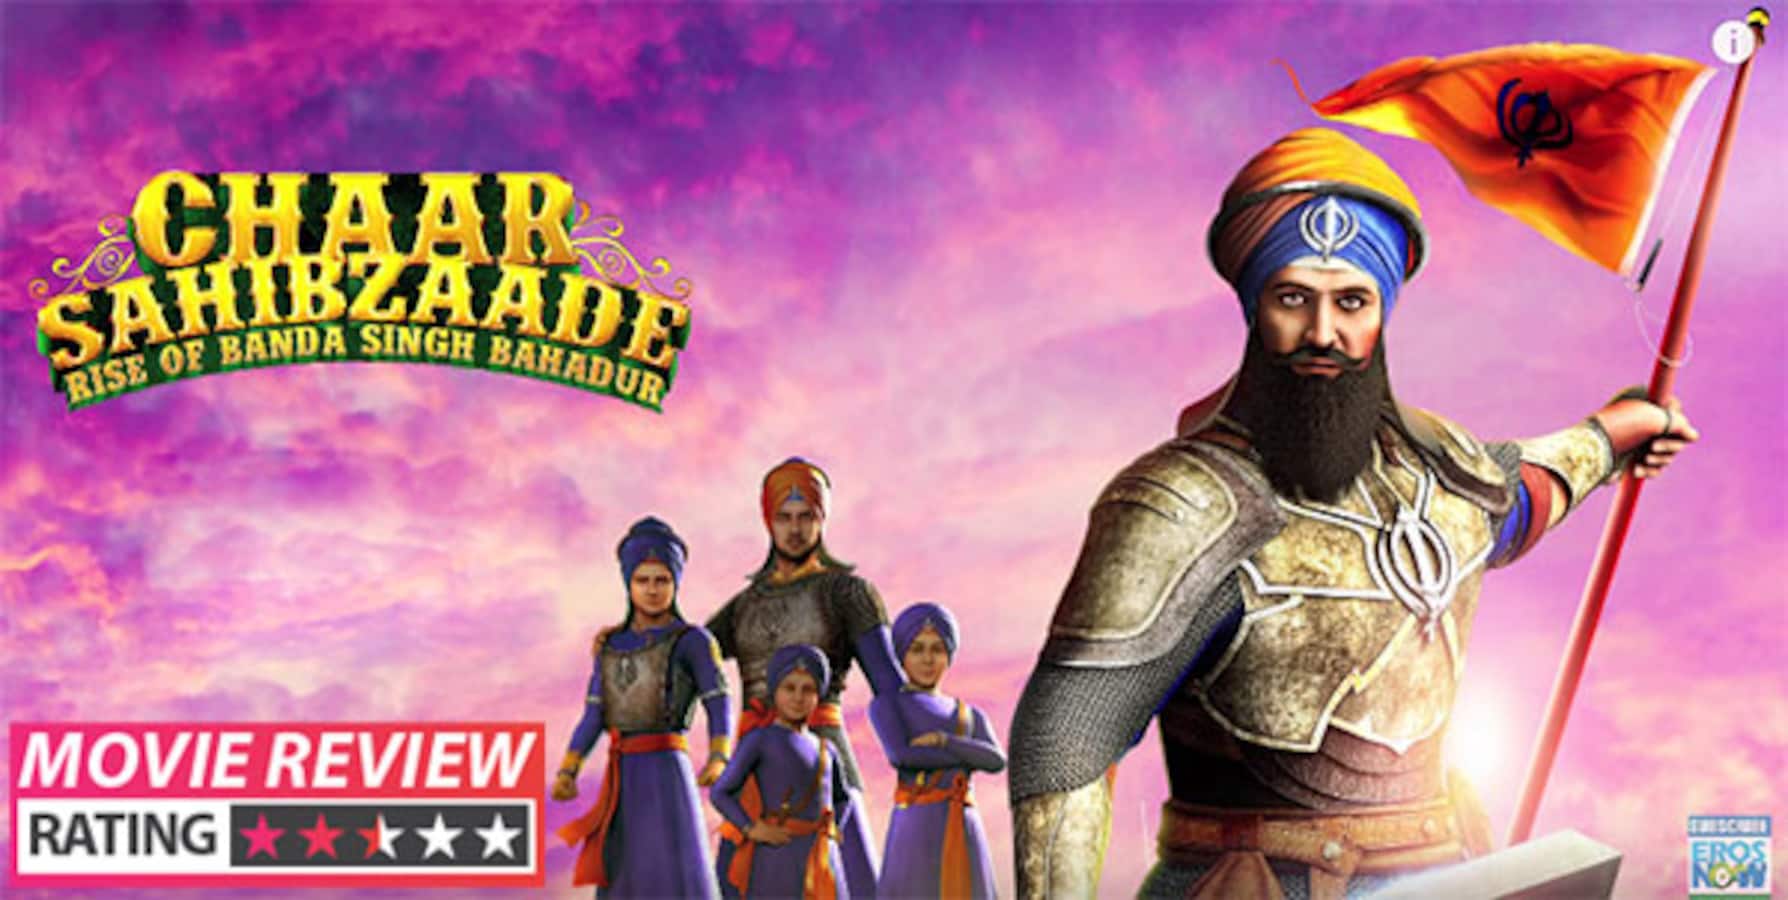 Chaar Sahibzaade: Rise of Banda Singh Bahadur movie review: Impressive  visuals and inspiring story - Bollywood News & Gossip, Movie Reviews,  Trailers & Videos at 